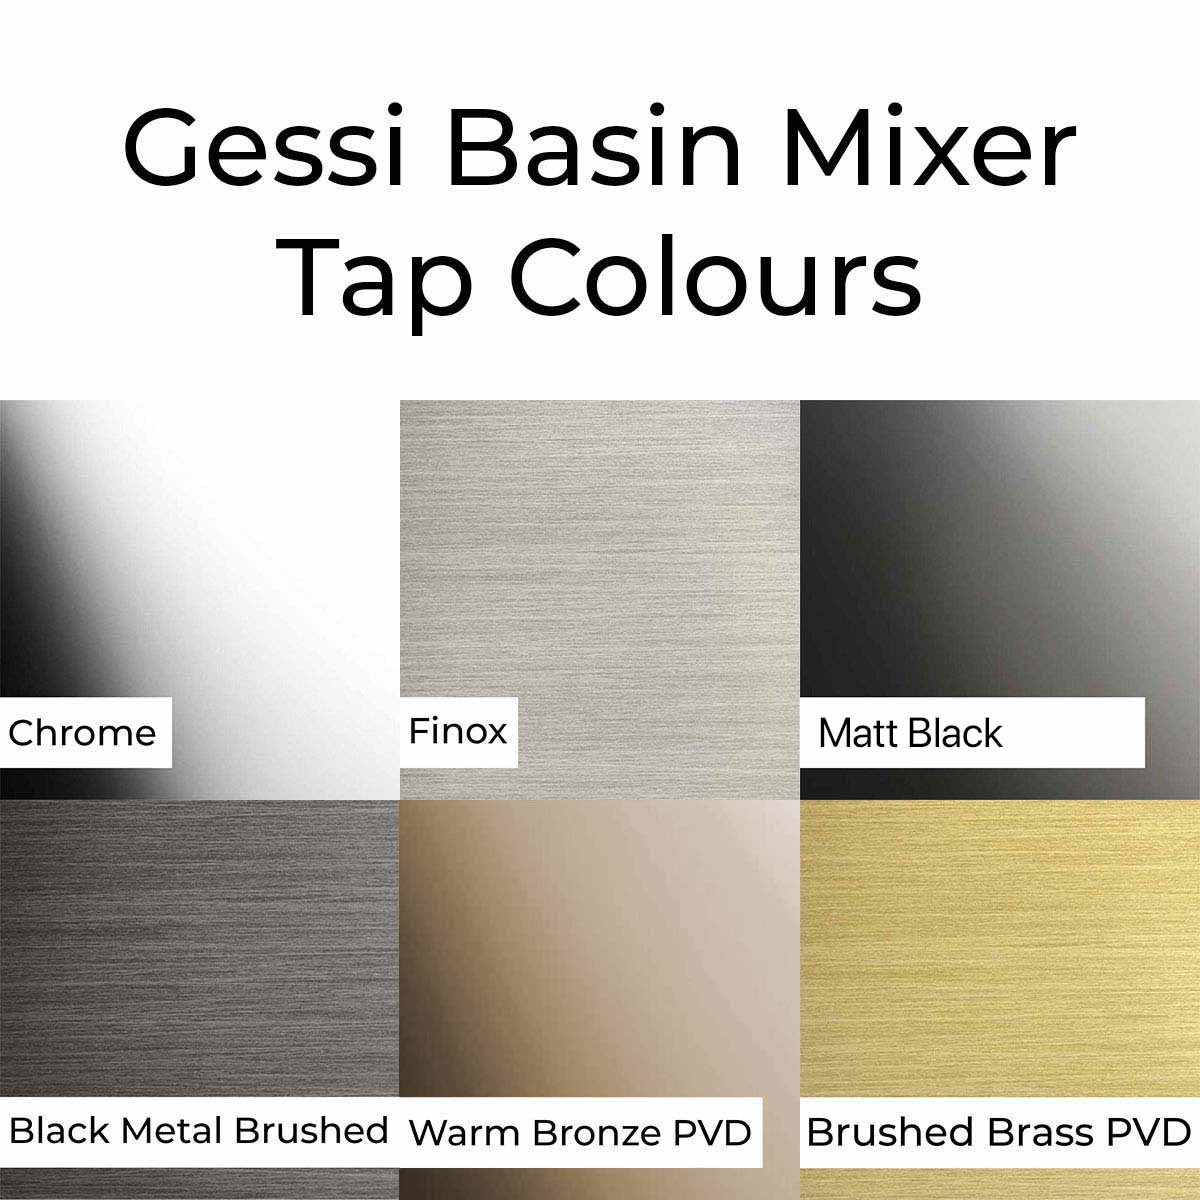 Gessi Via Manzoni Wall Mounted Basin Mixer Colours